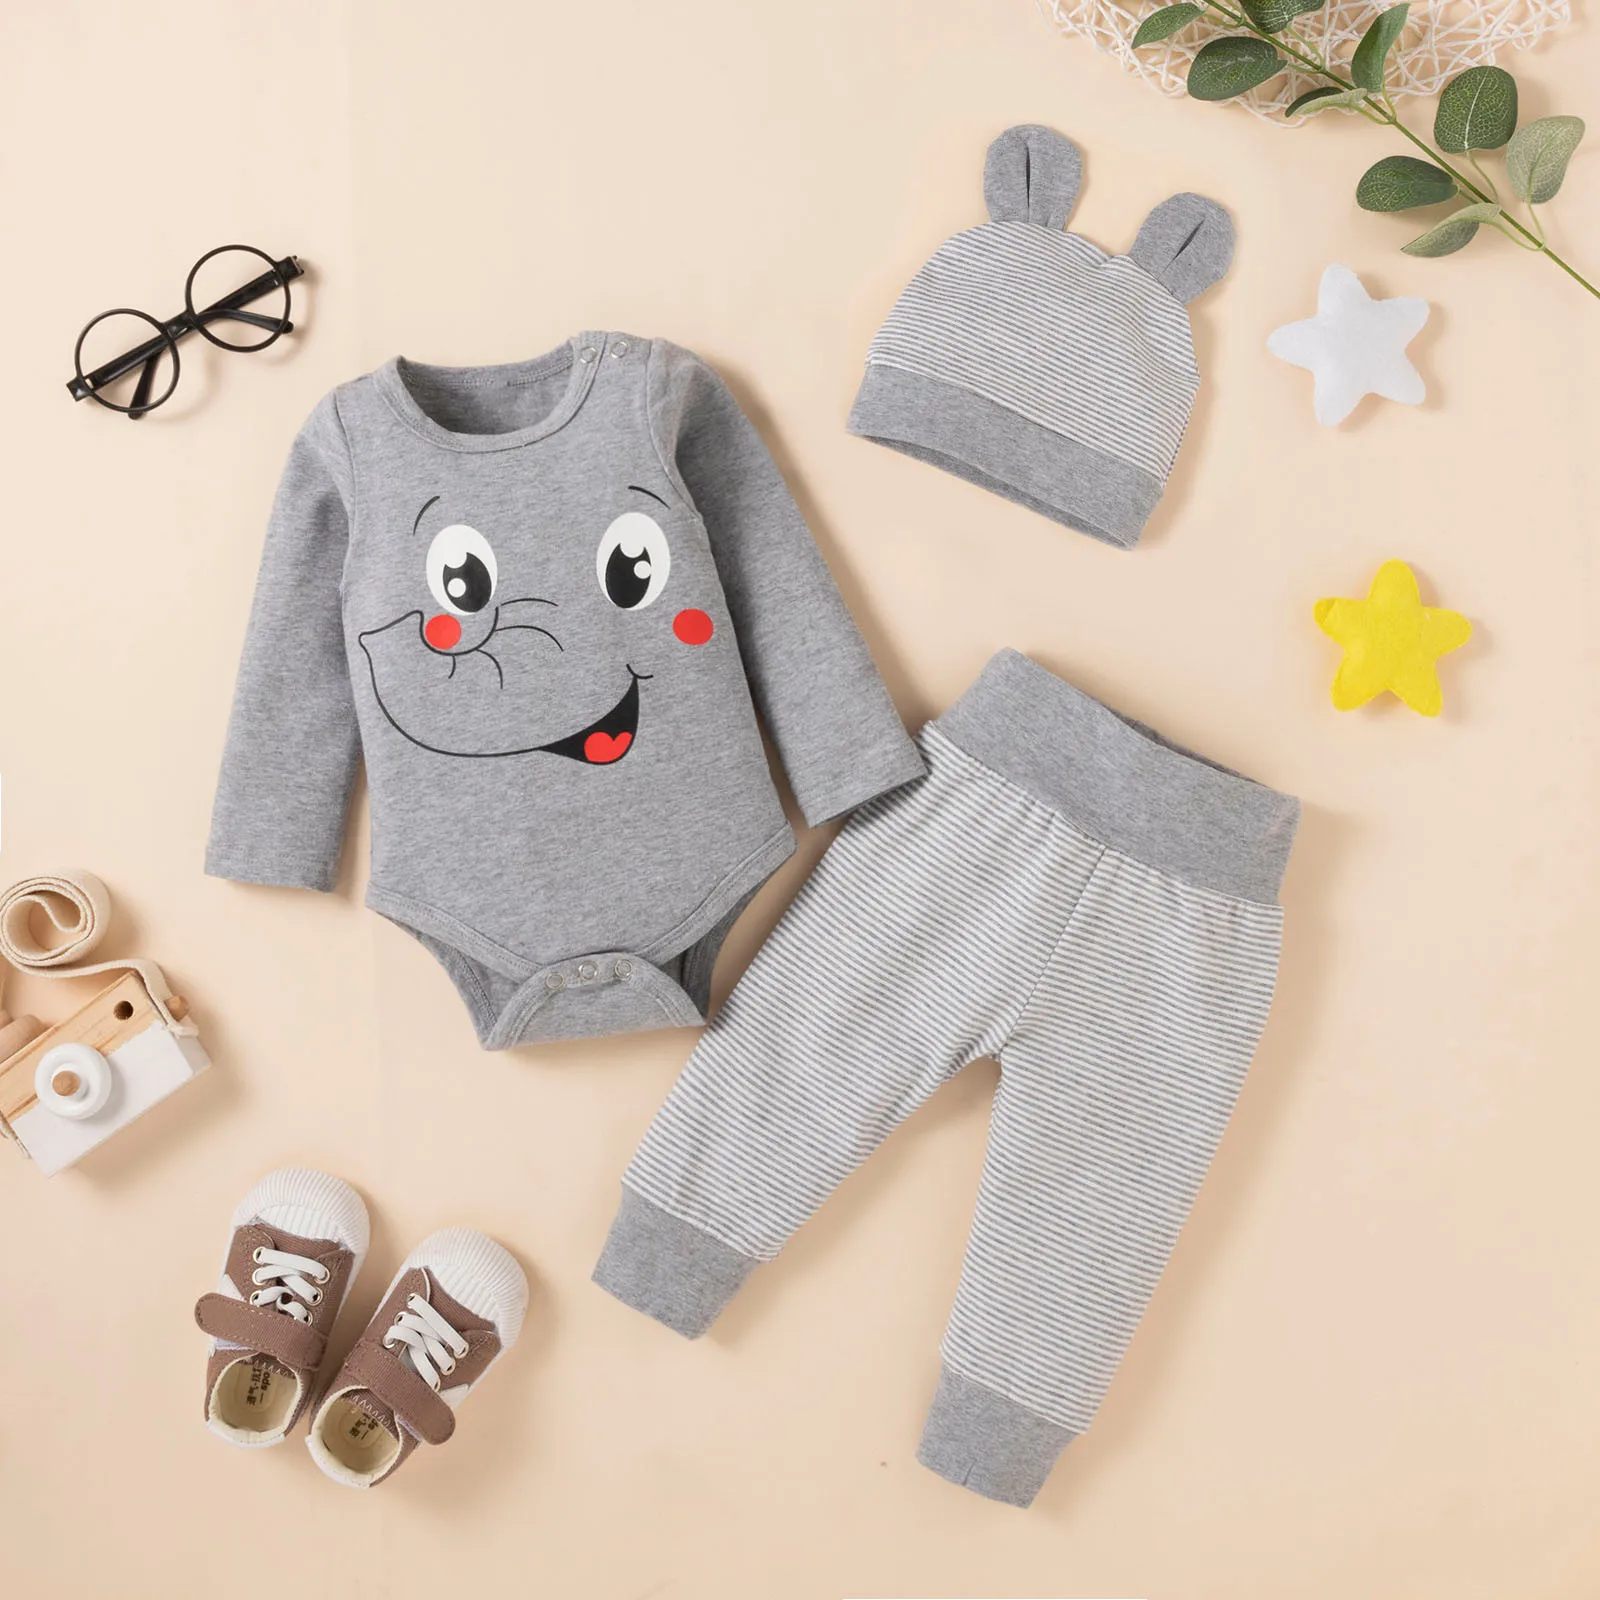 

Toddler Baby Boy Girls Cartoon Animal Pattern Bodysuit Romper Jumpsuit Tops PantsHat Long Sleeve Clothe 3PCS Outfit Set